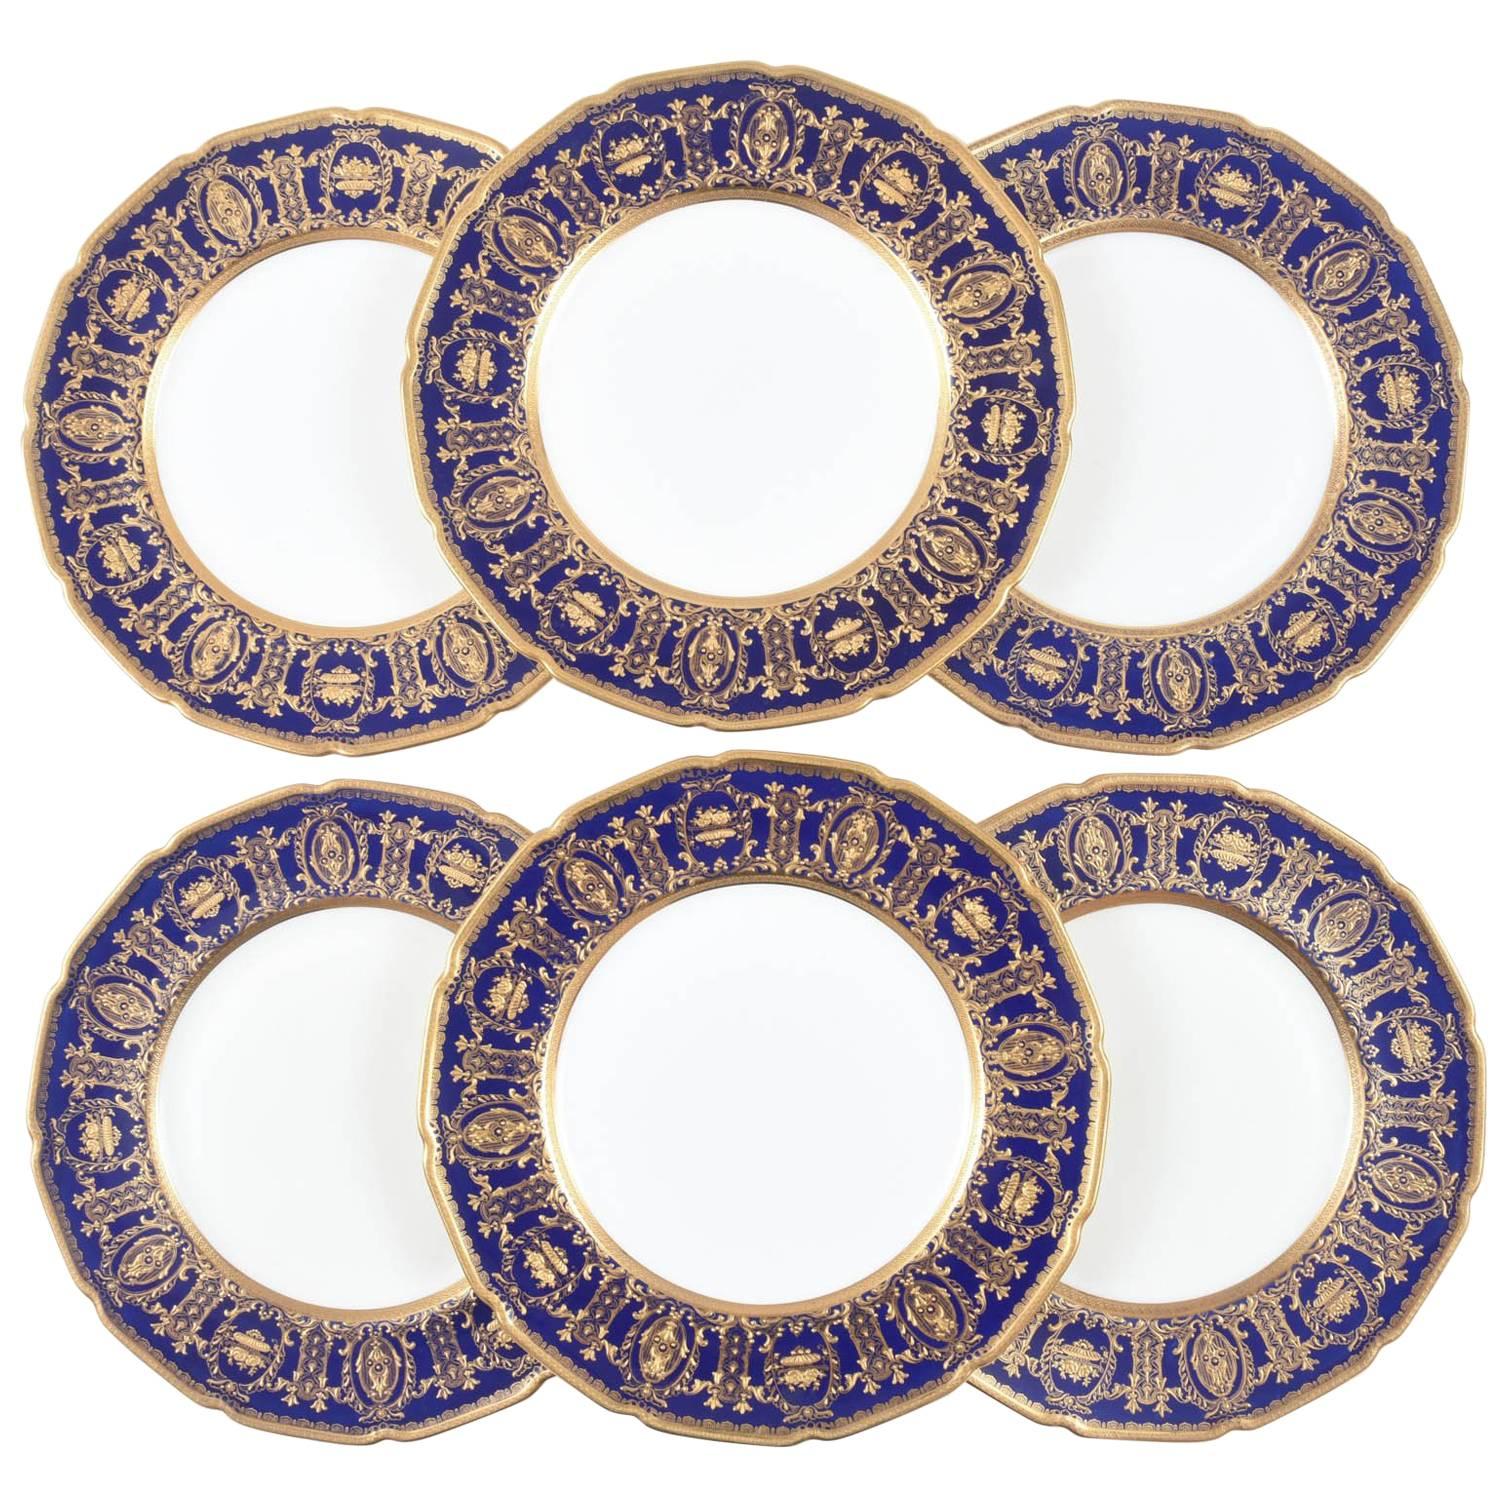 Six Custom for Tiffany Cobalt Blue & Gilt Encrusted Dinner Plates, English